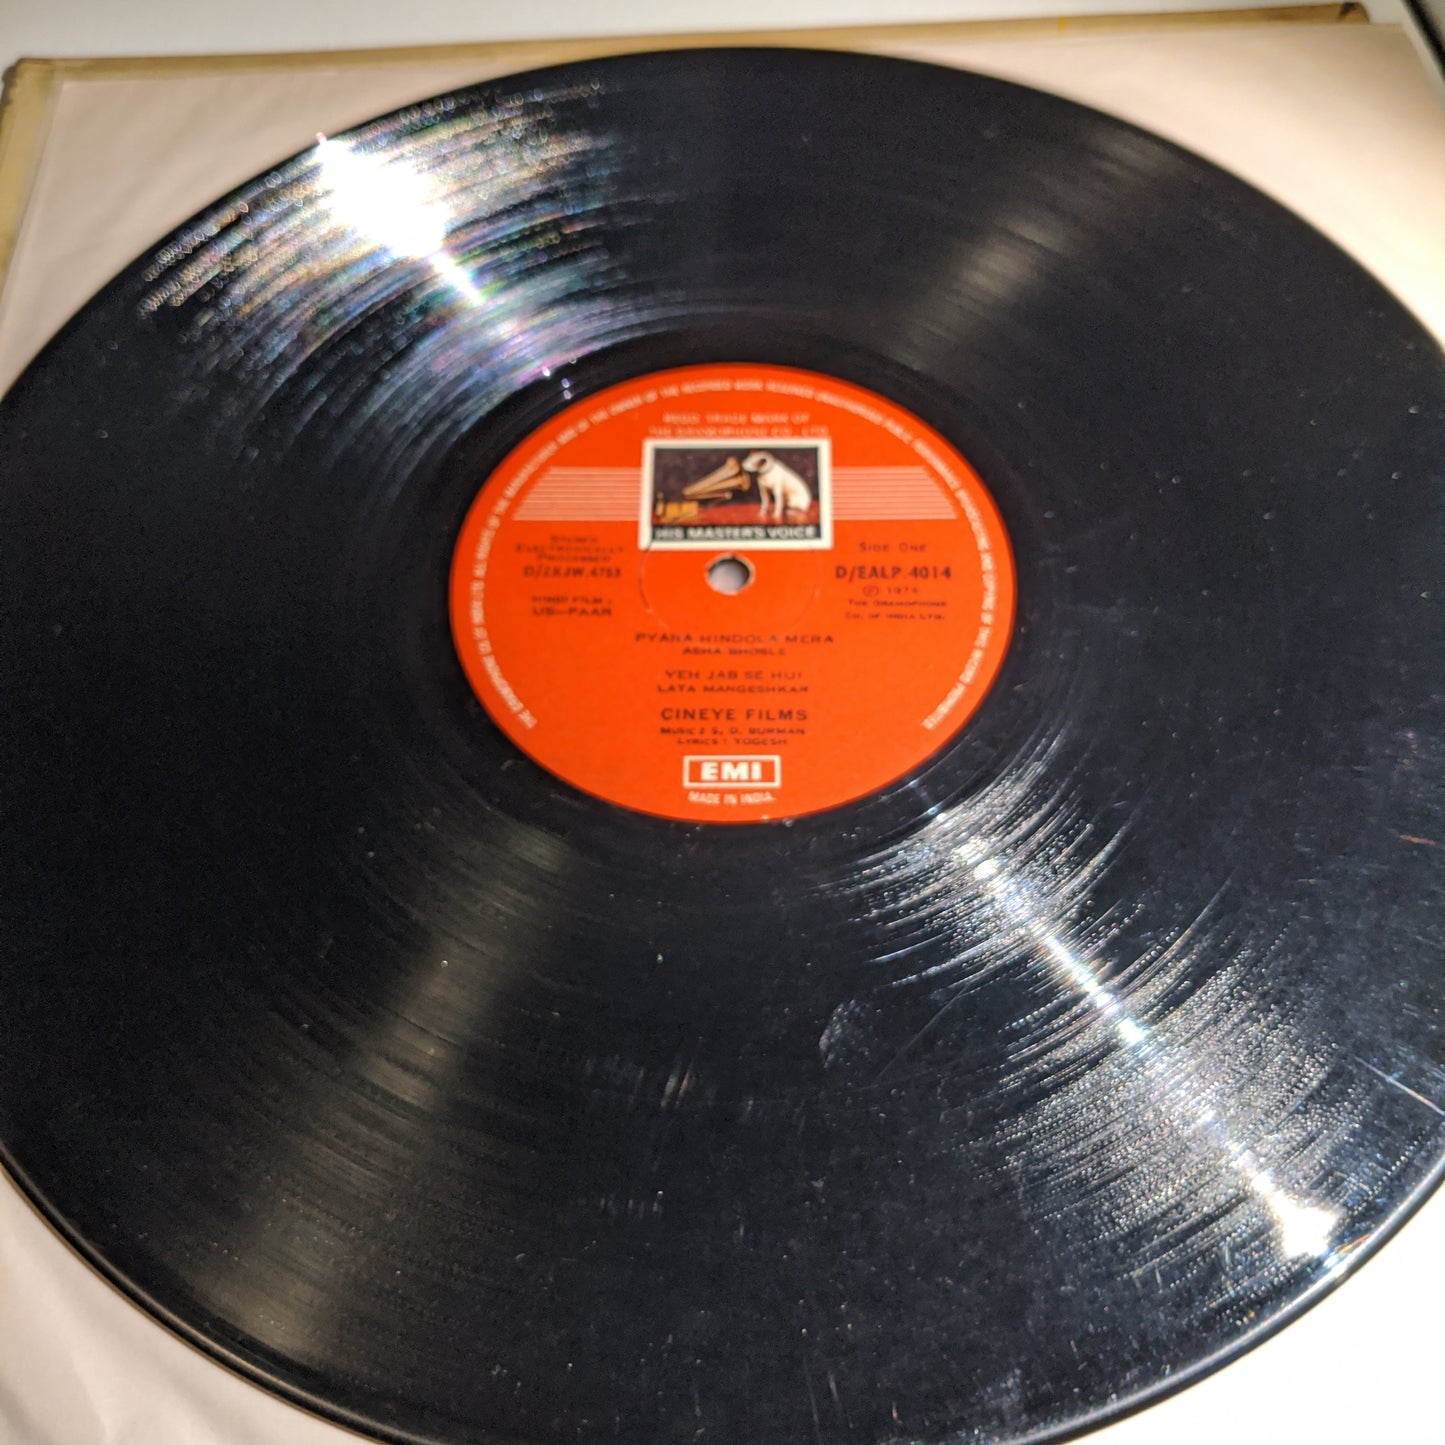 US PAAR - S D Burman rare classic in First heavy HMV pressing VG+